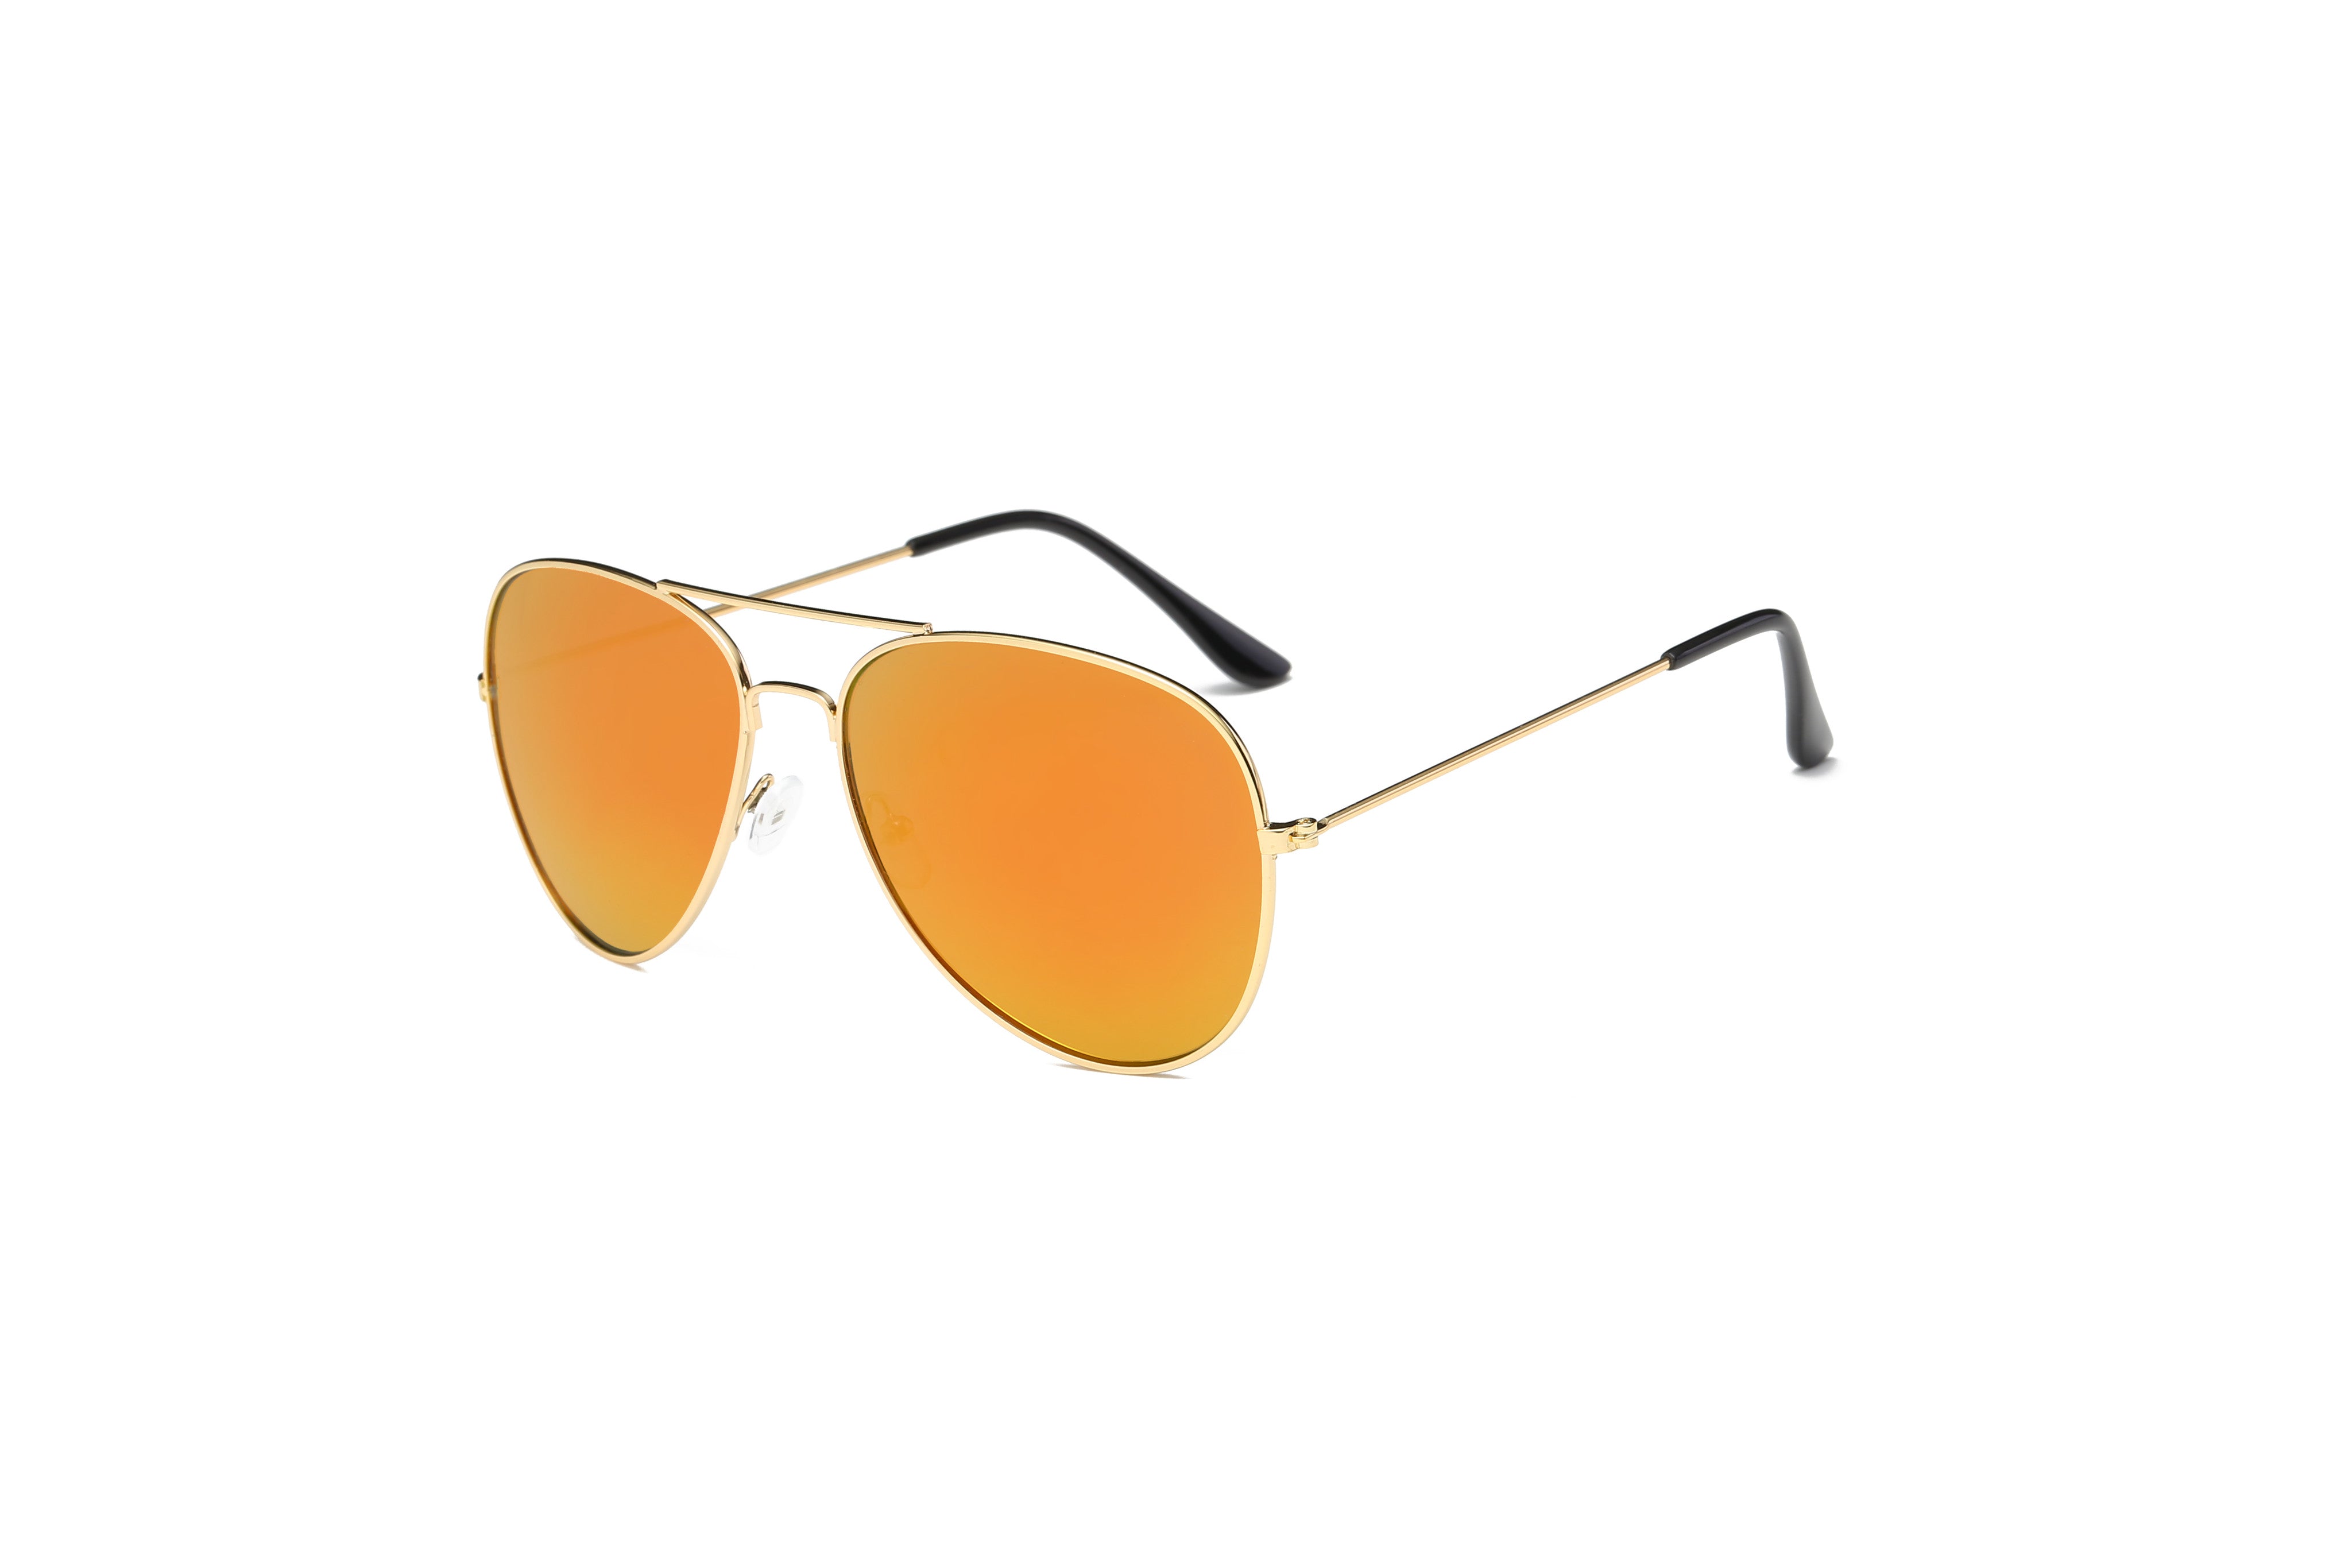 S1011 - Classic Aviator Fashion Sunglasses GOLD/Orange